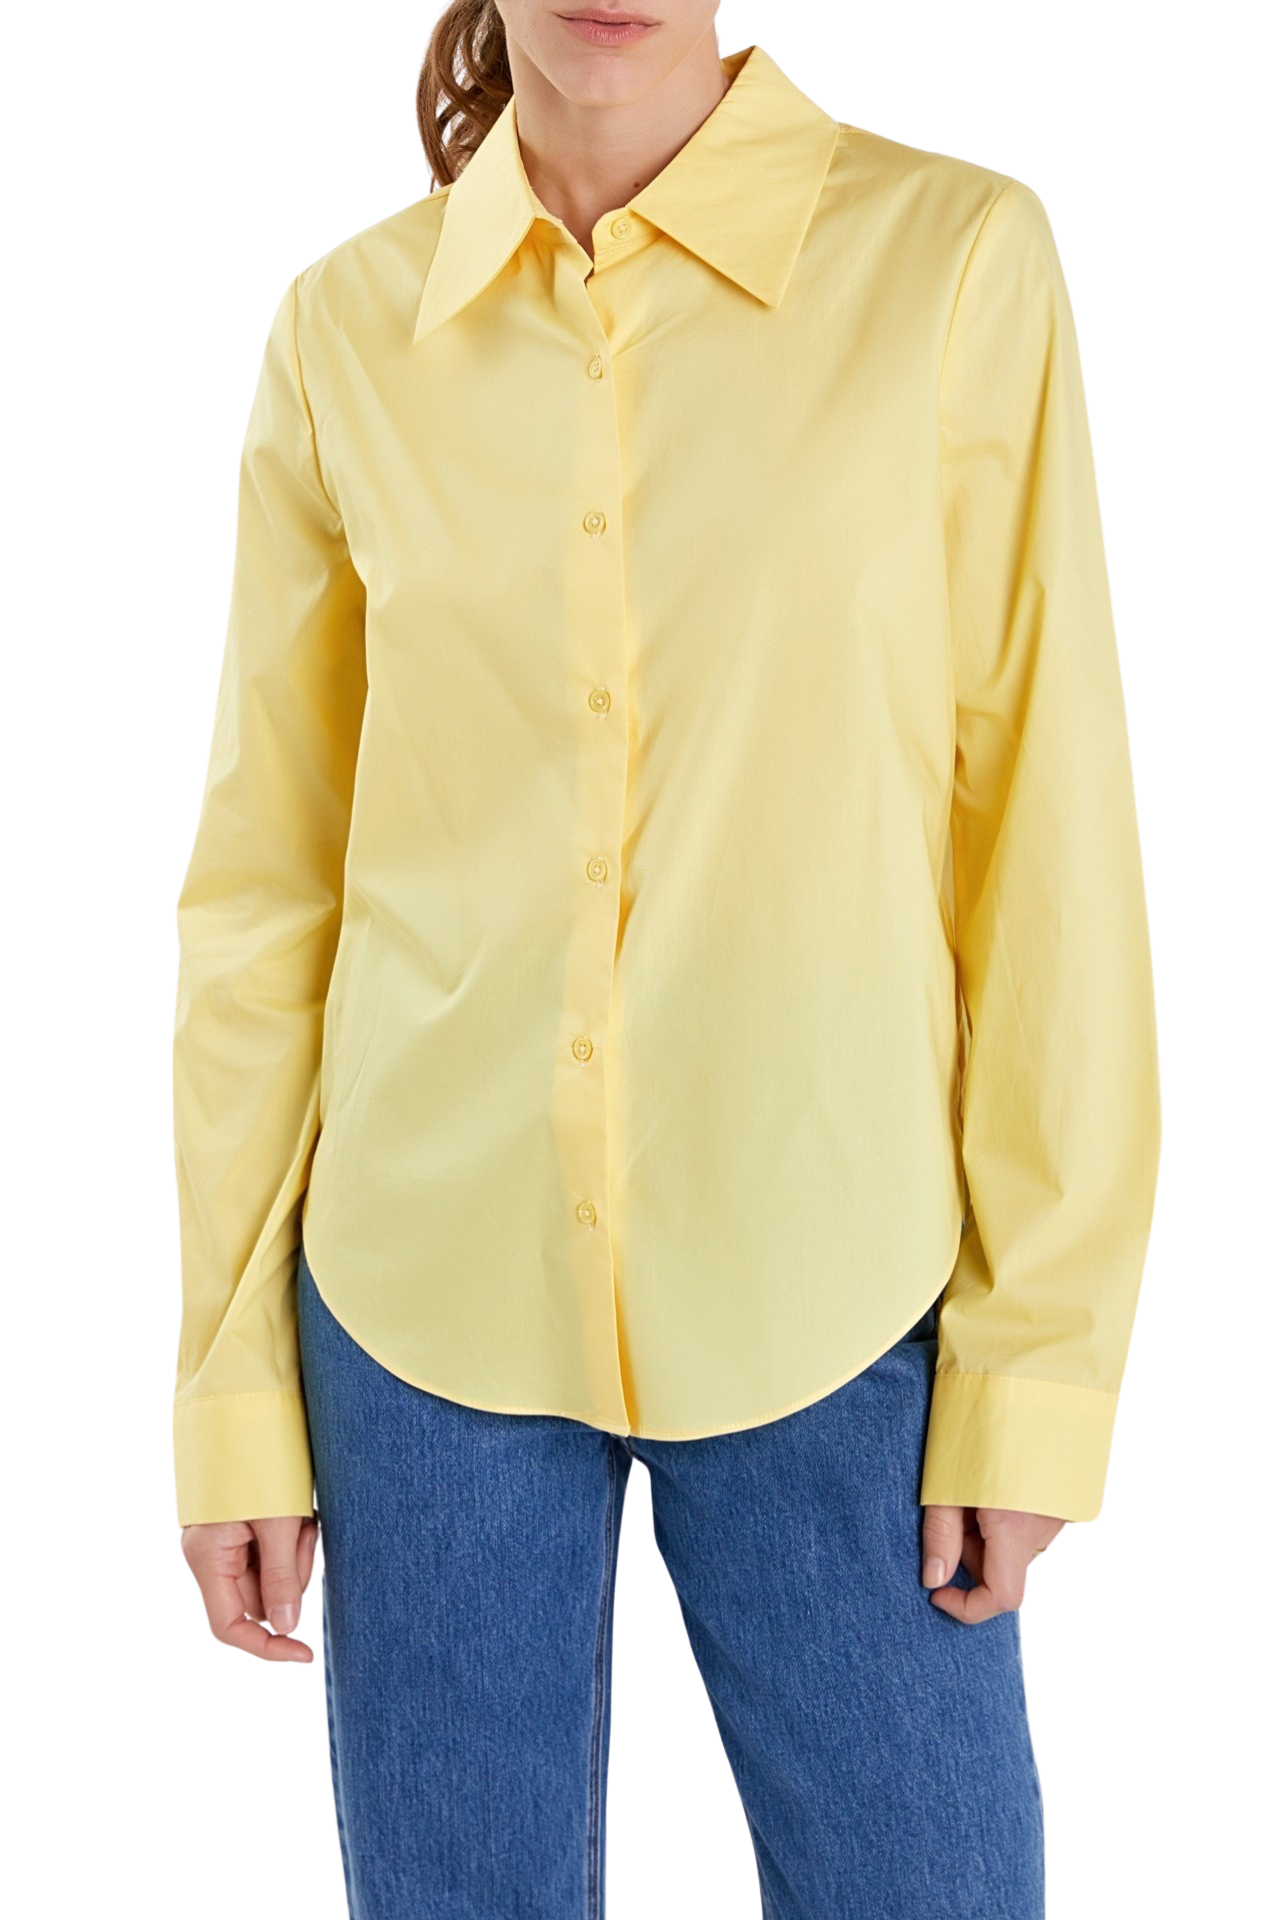 Apparel- English Factory Accent Collar Poplin Dress Shirt